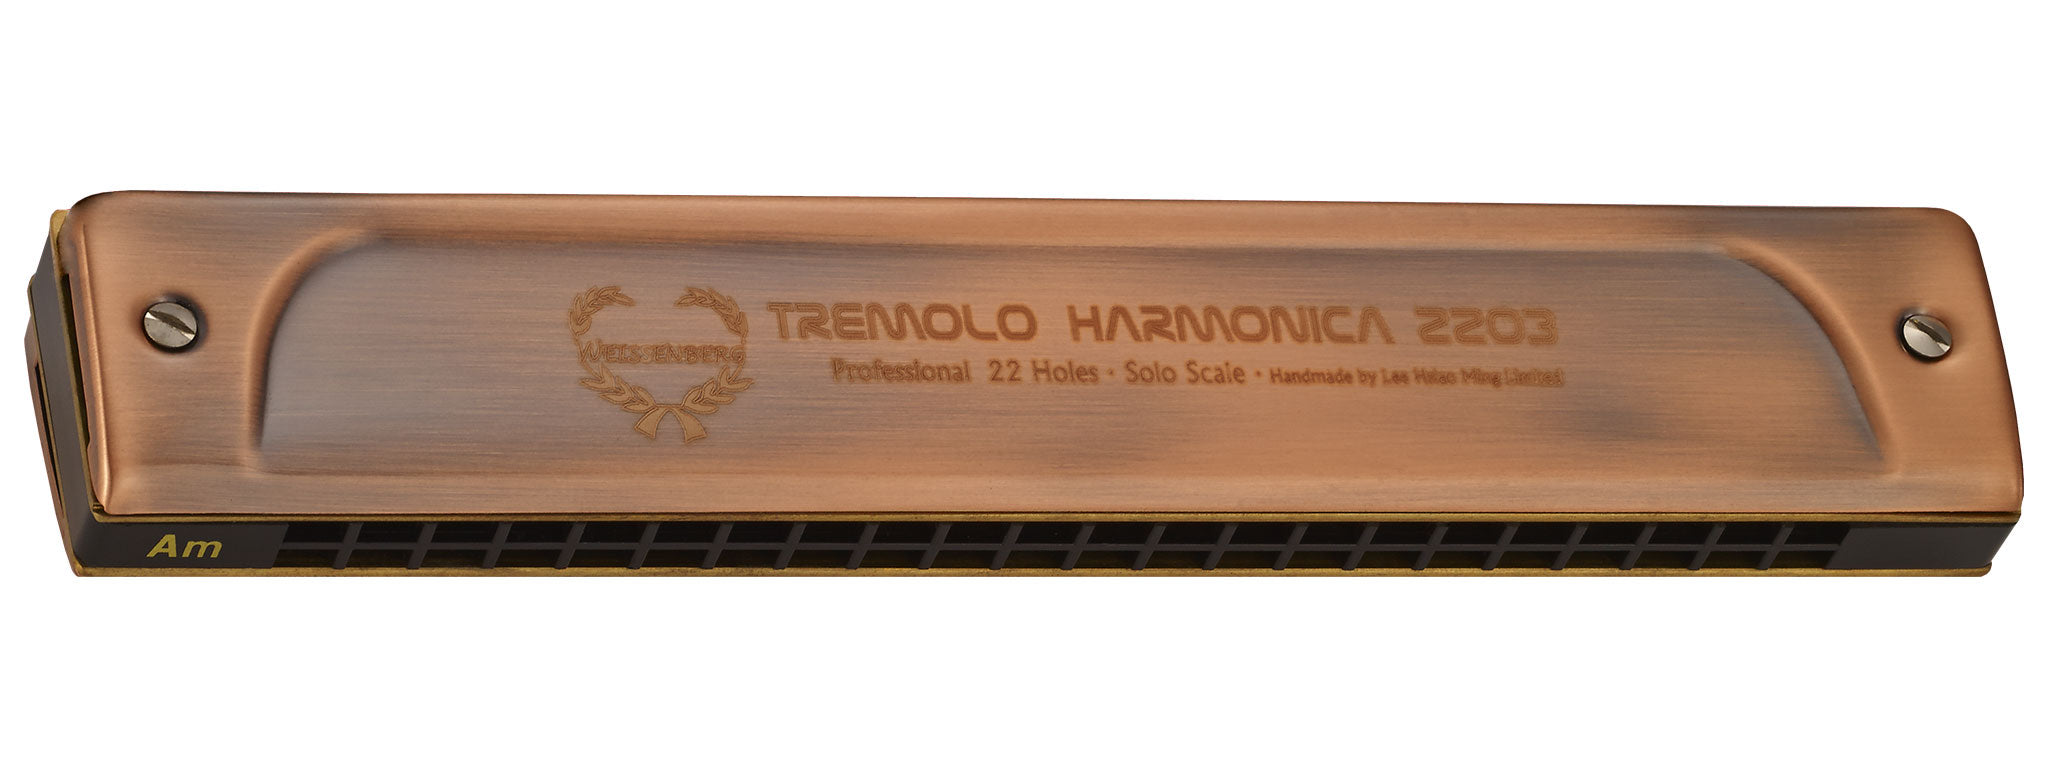 Harmonica tremolo 2203 / RD